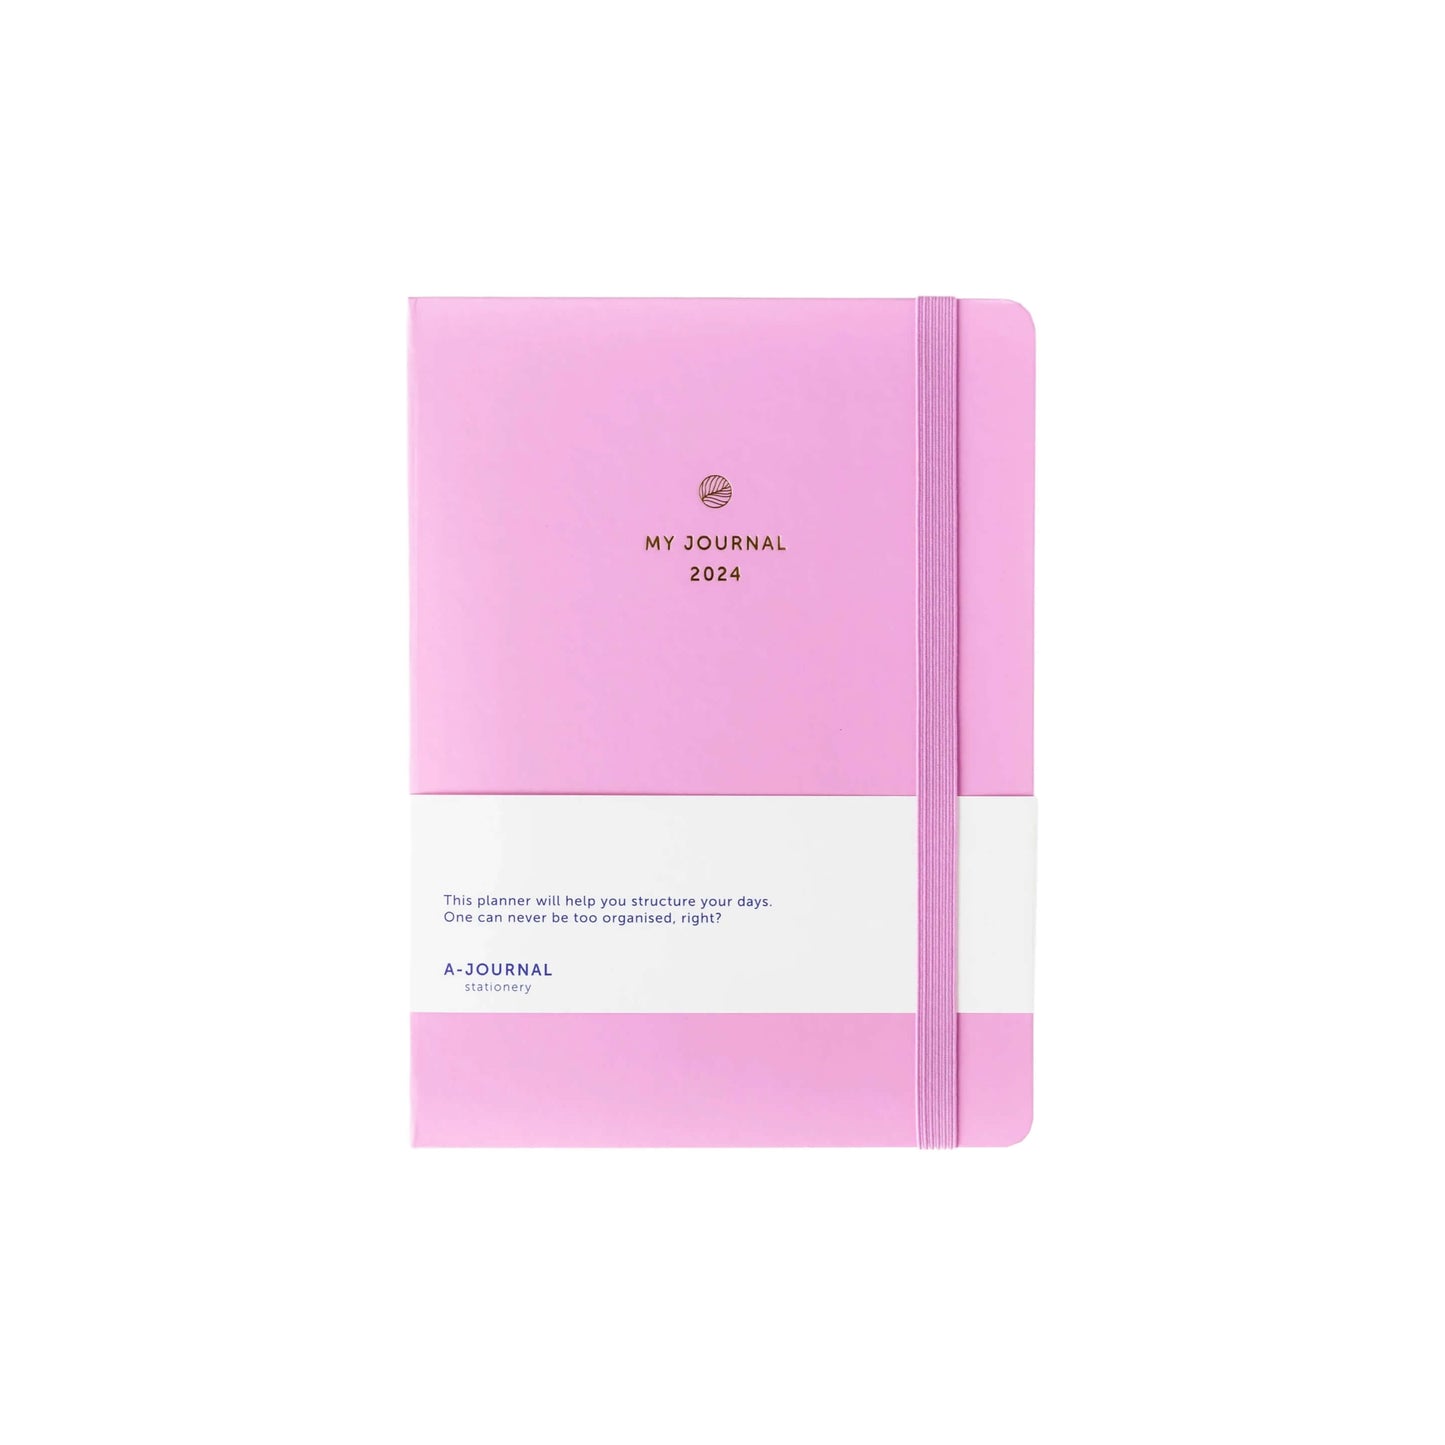 A-Journal - My Journal Agenda 2024 - Lilac